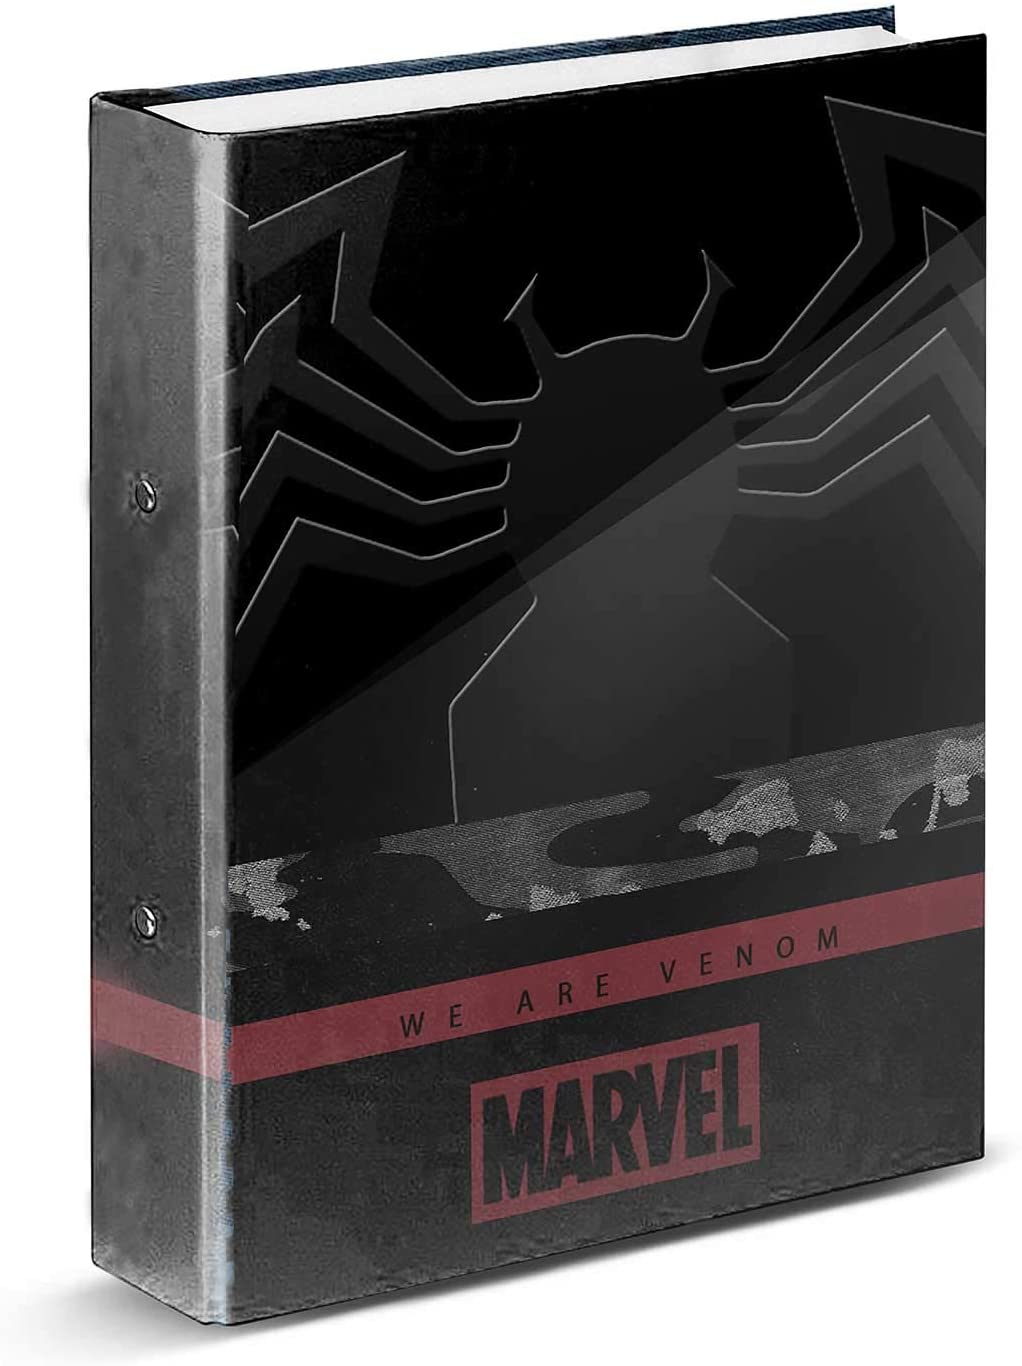 Marvel Venom Monster-Ring Binder